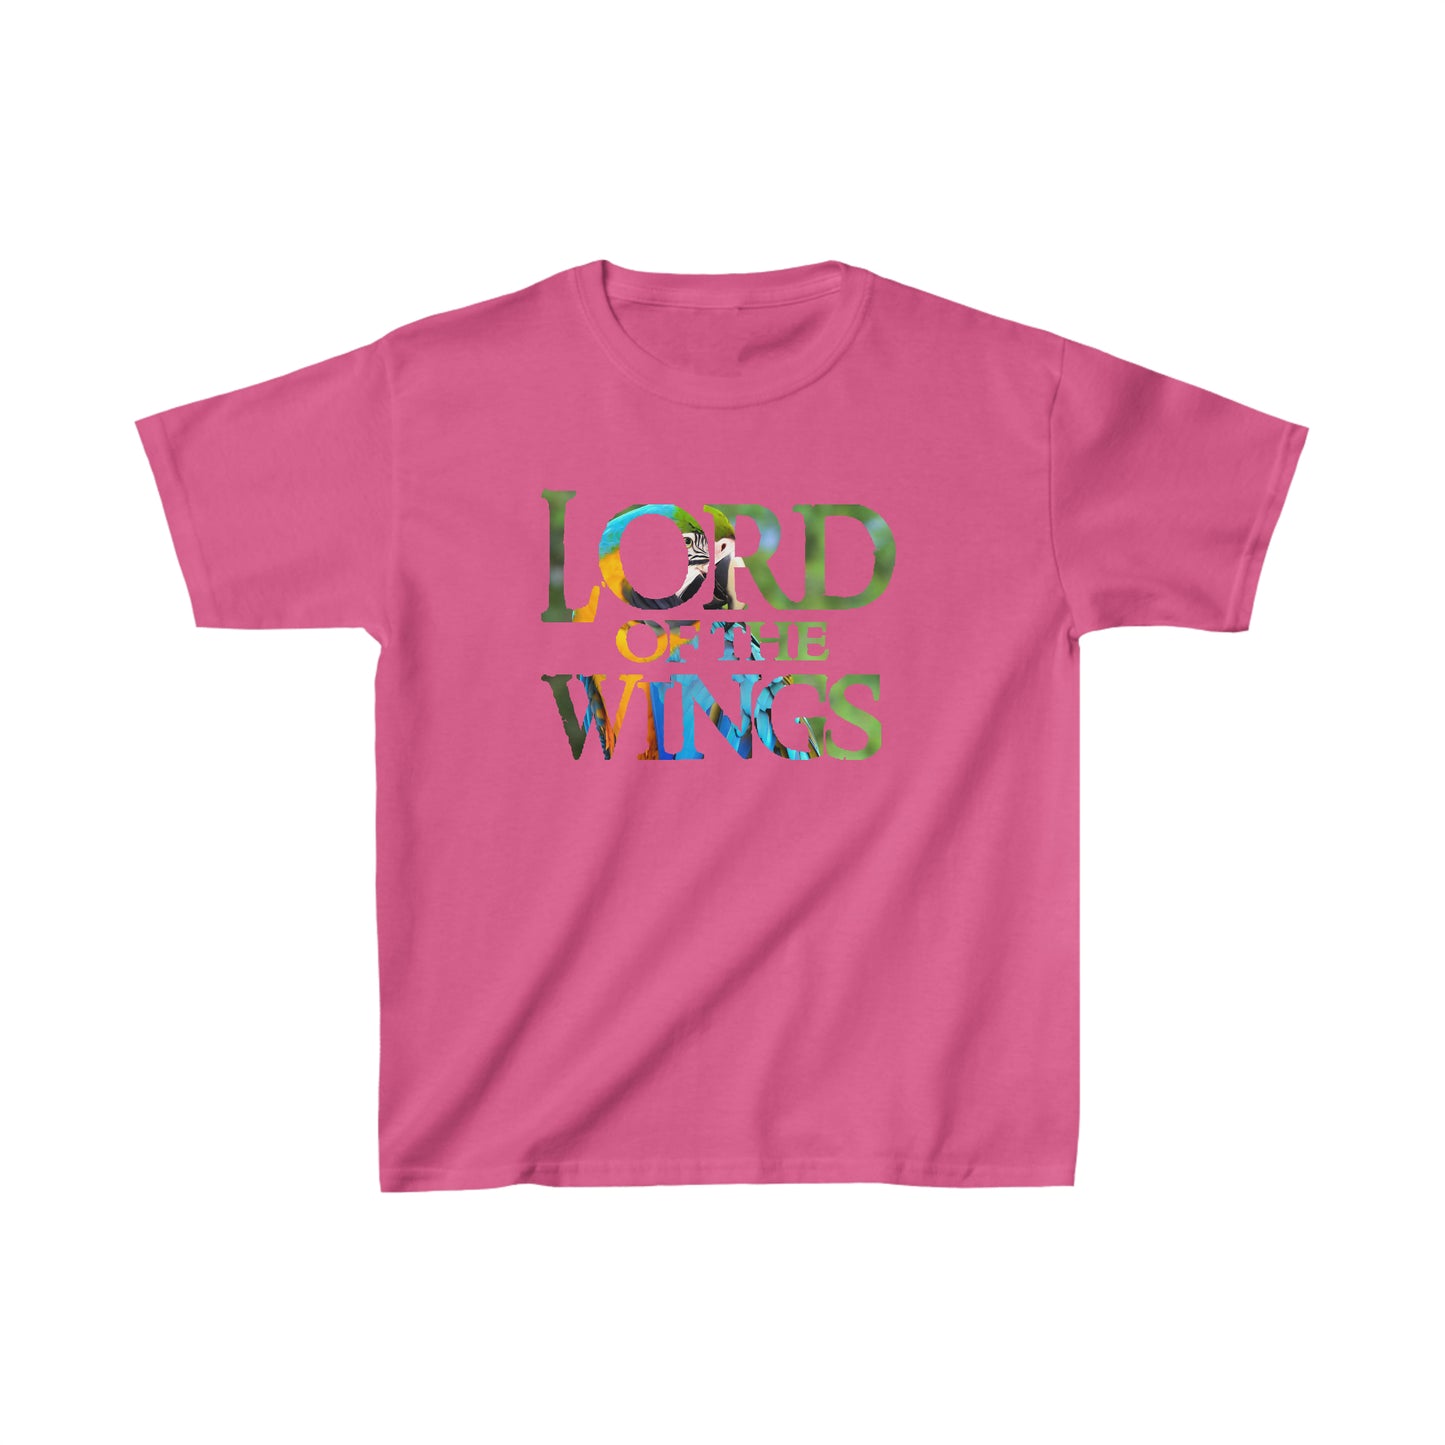 LOTW Kids T Shirt